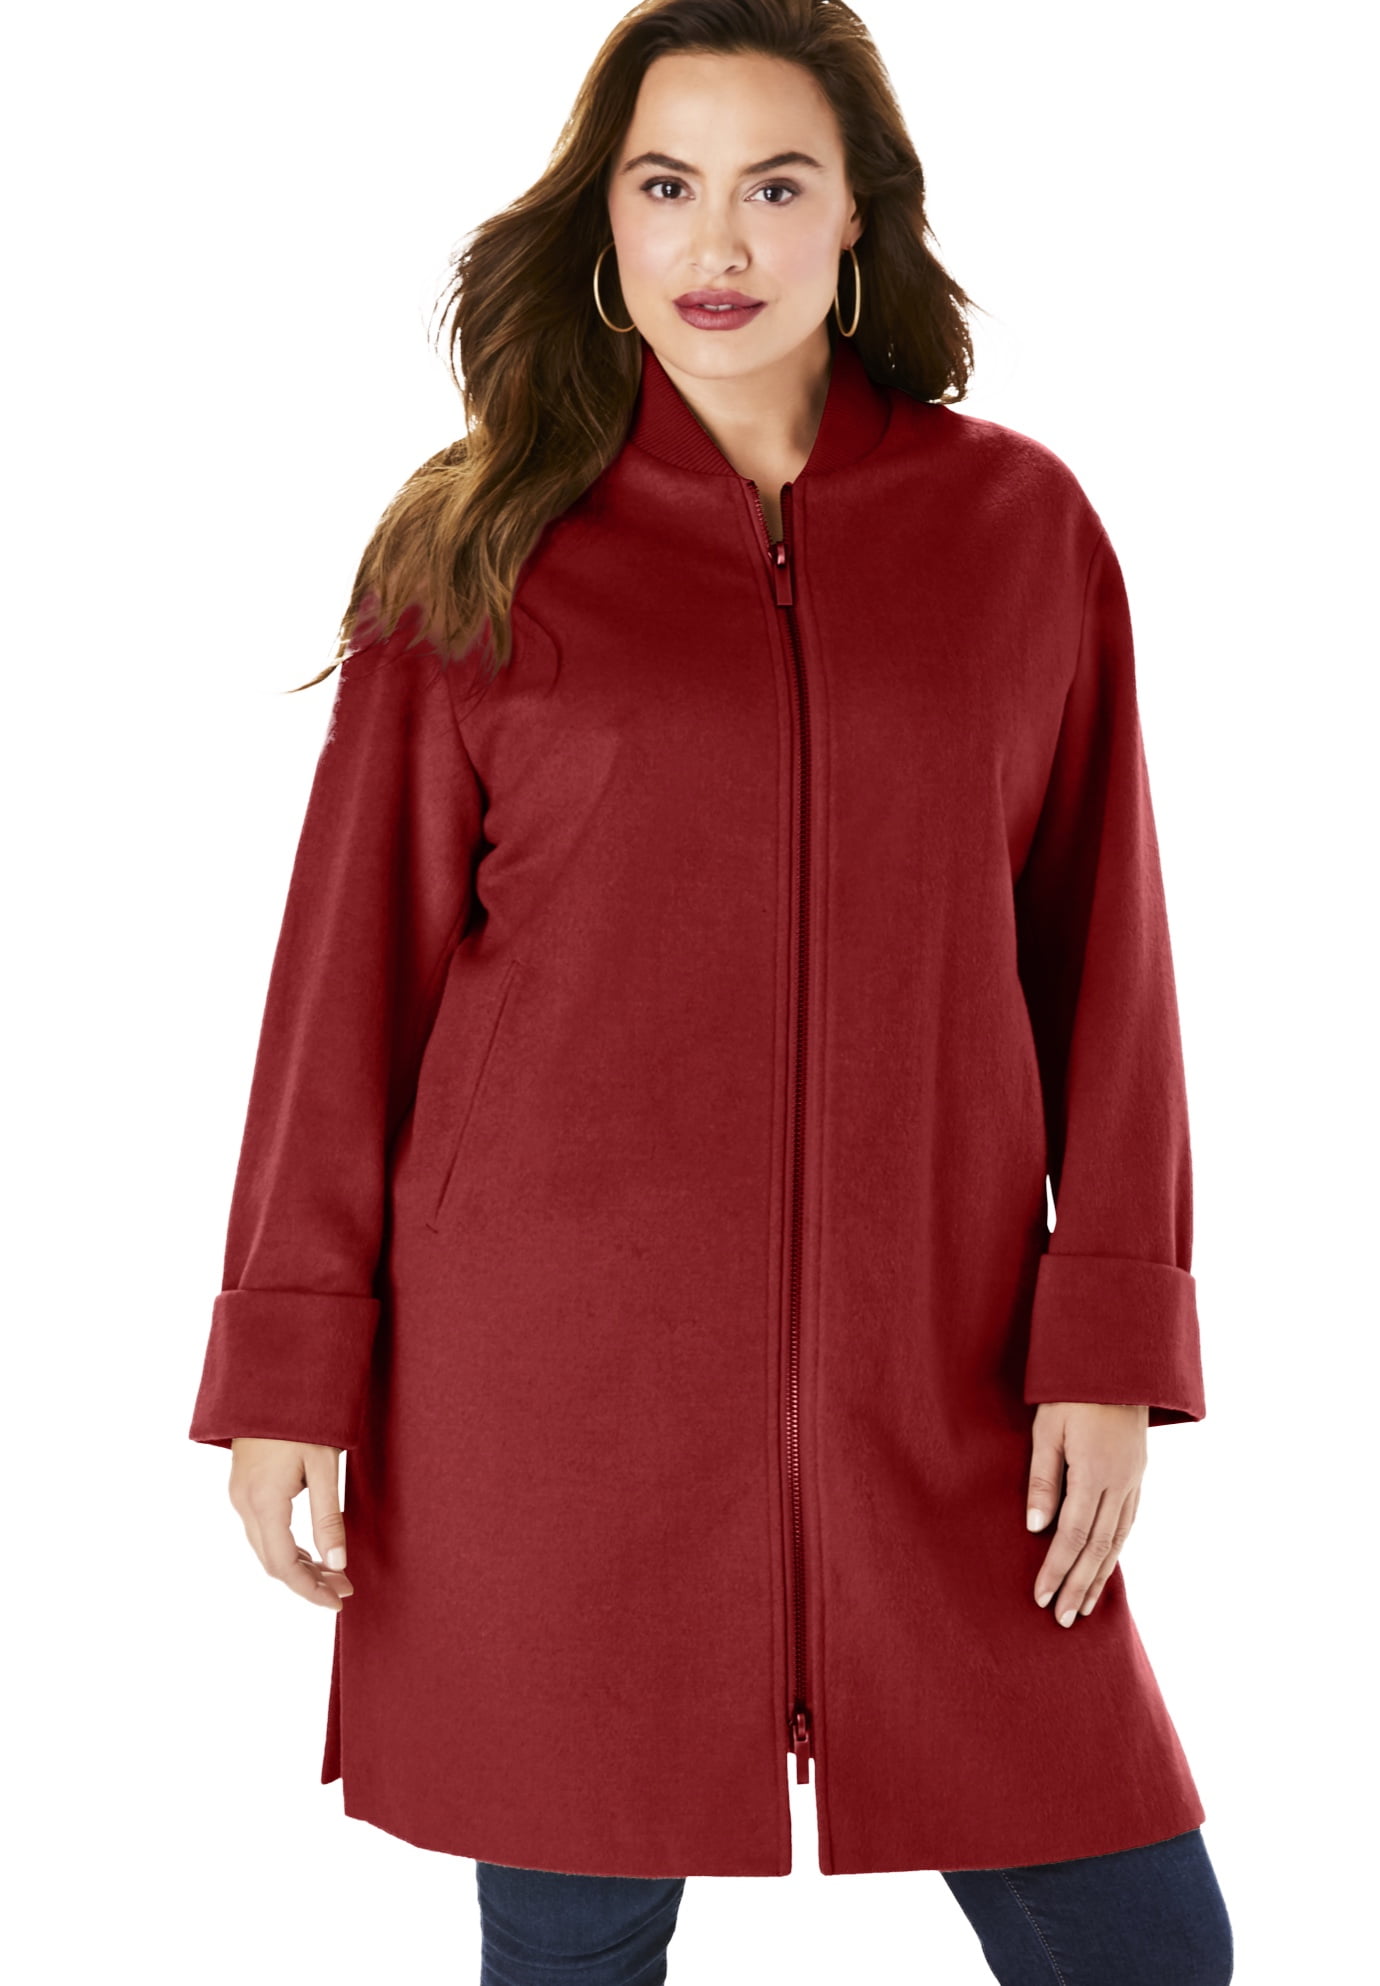 JESPER Women Winter Warm Faux Fur Hooded Thick Down Coats Jacket Maxi Overcoat Pocket Red